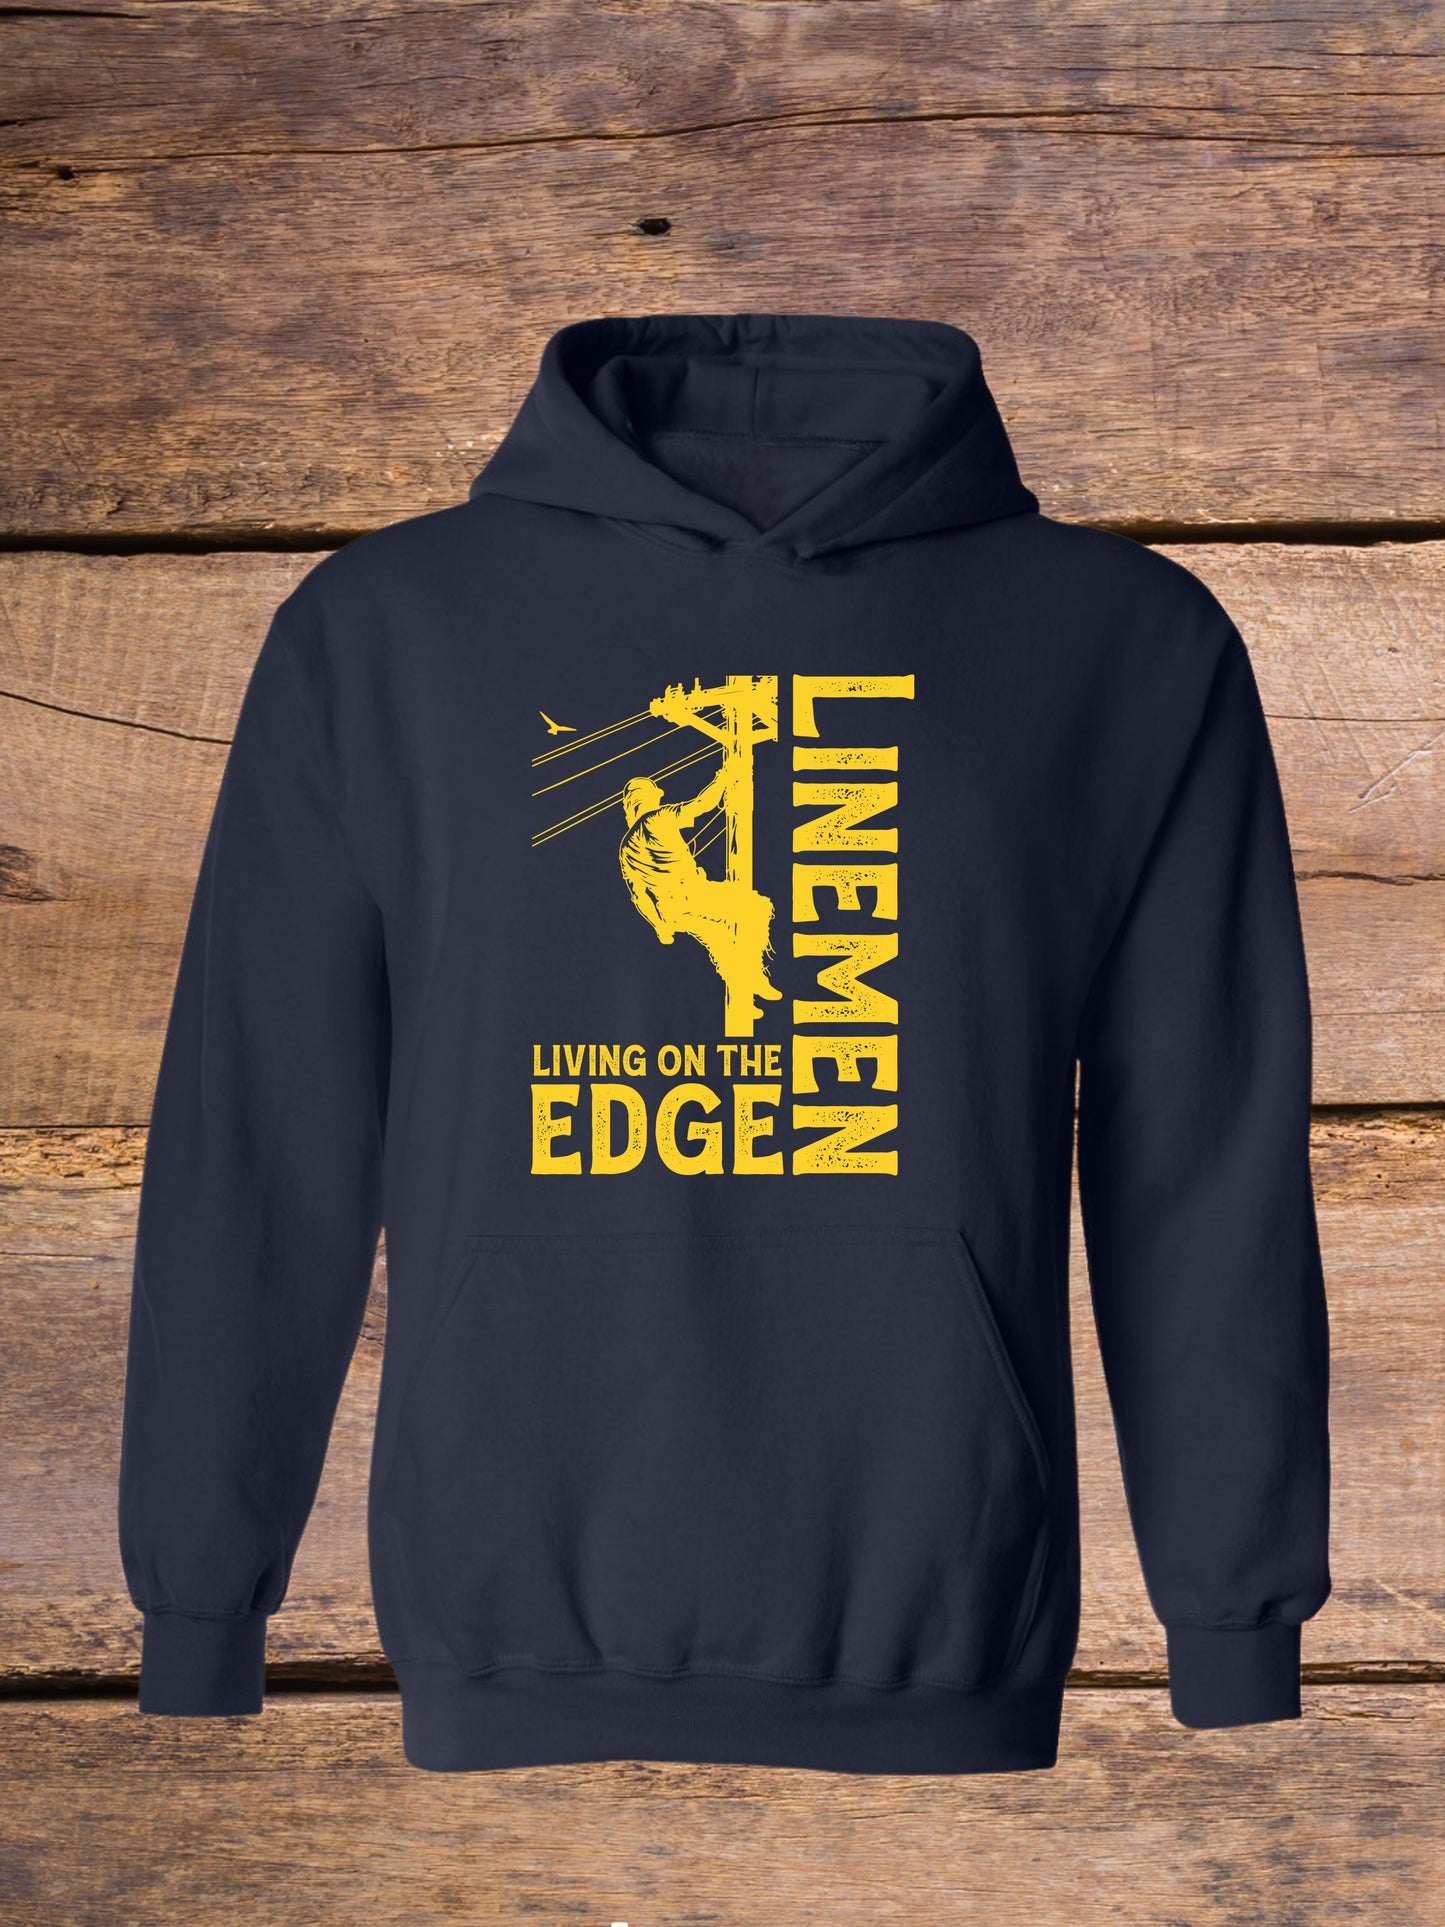 Power Lineman - Living on the Edge - Hooded Sweatshirt - Navy